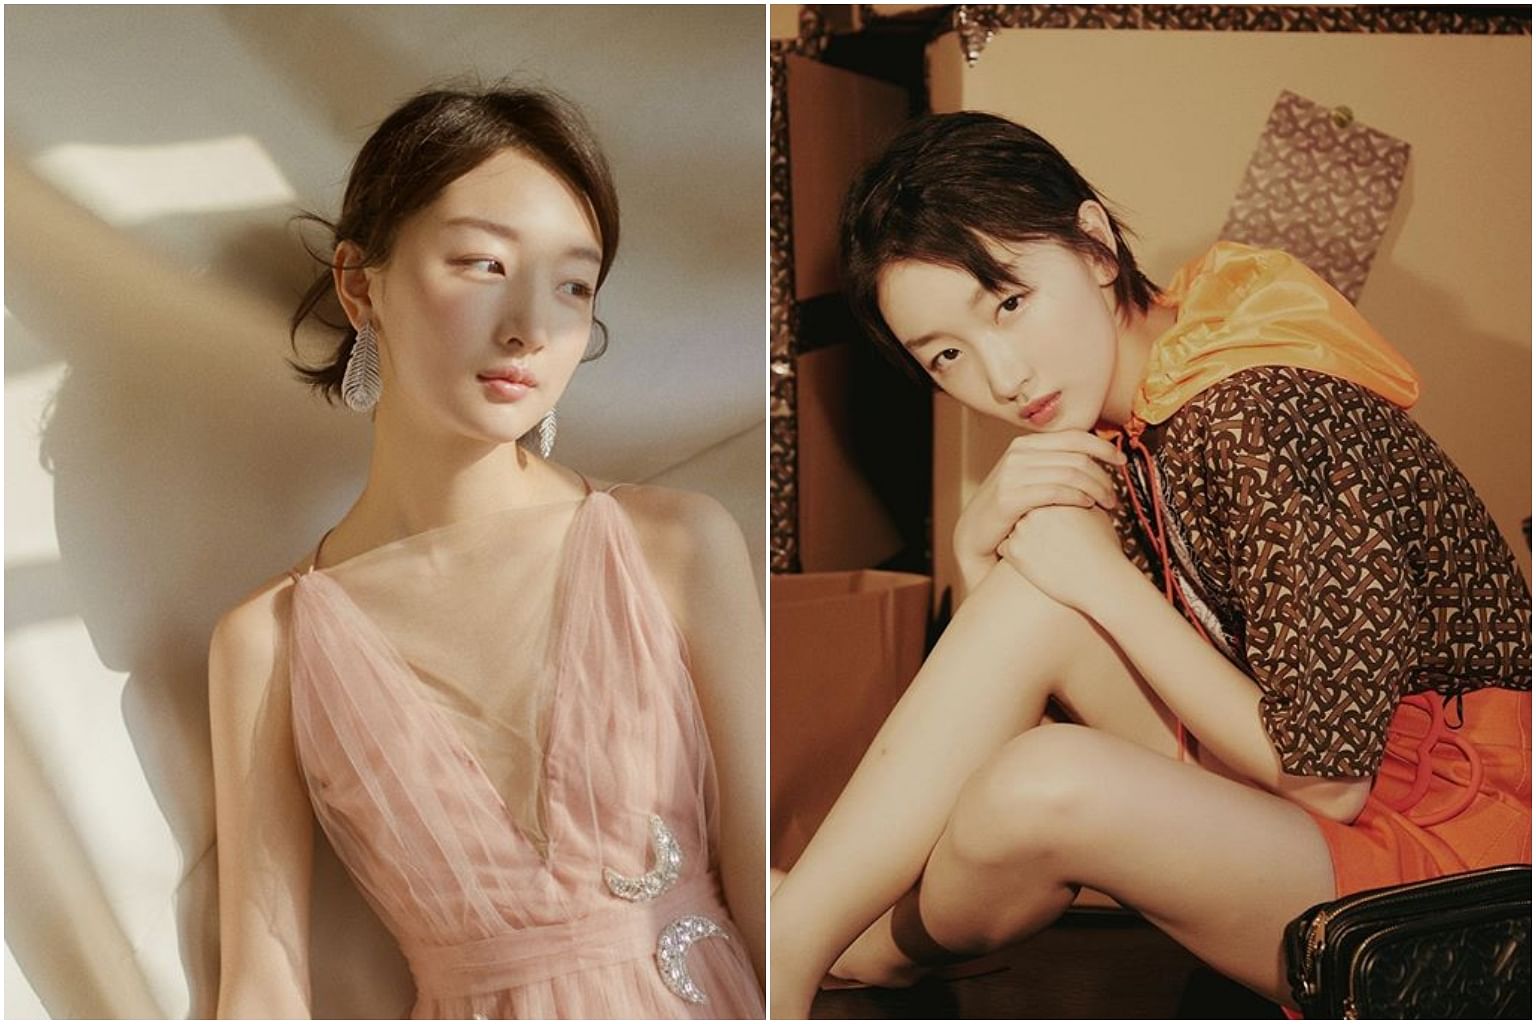 Zhou Dongyu is the new Victoria's Secret ambassador for China